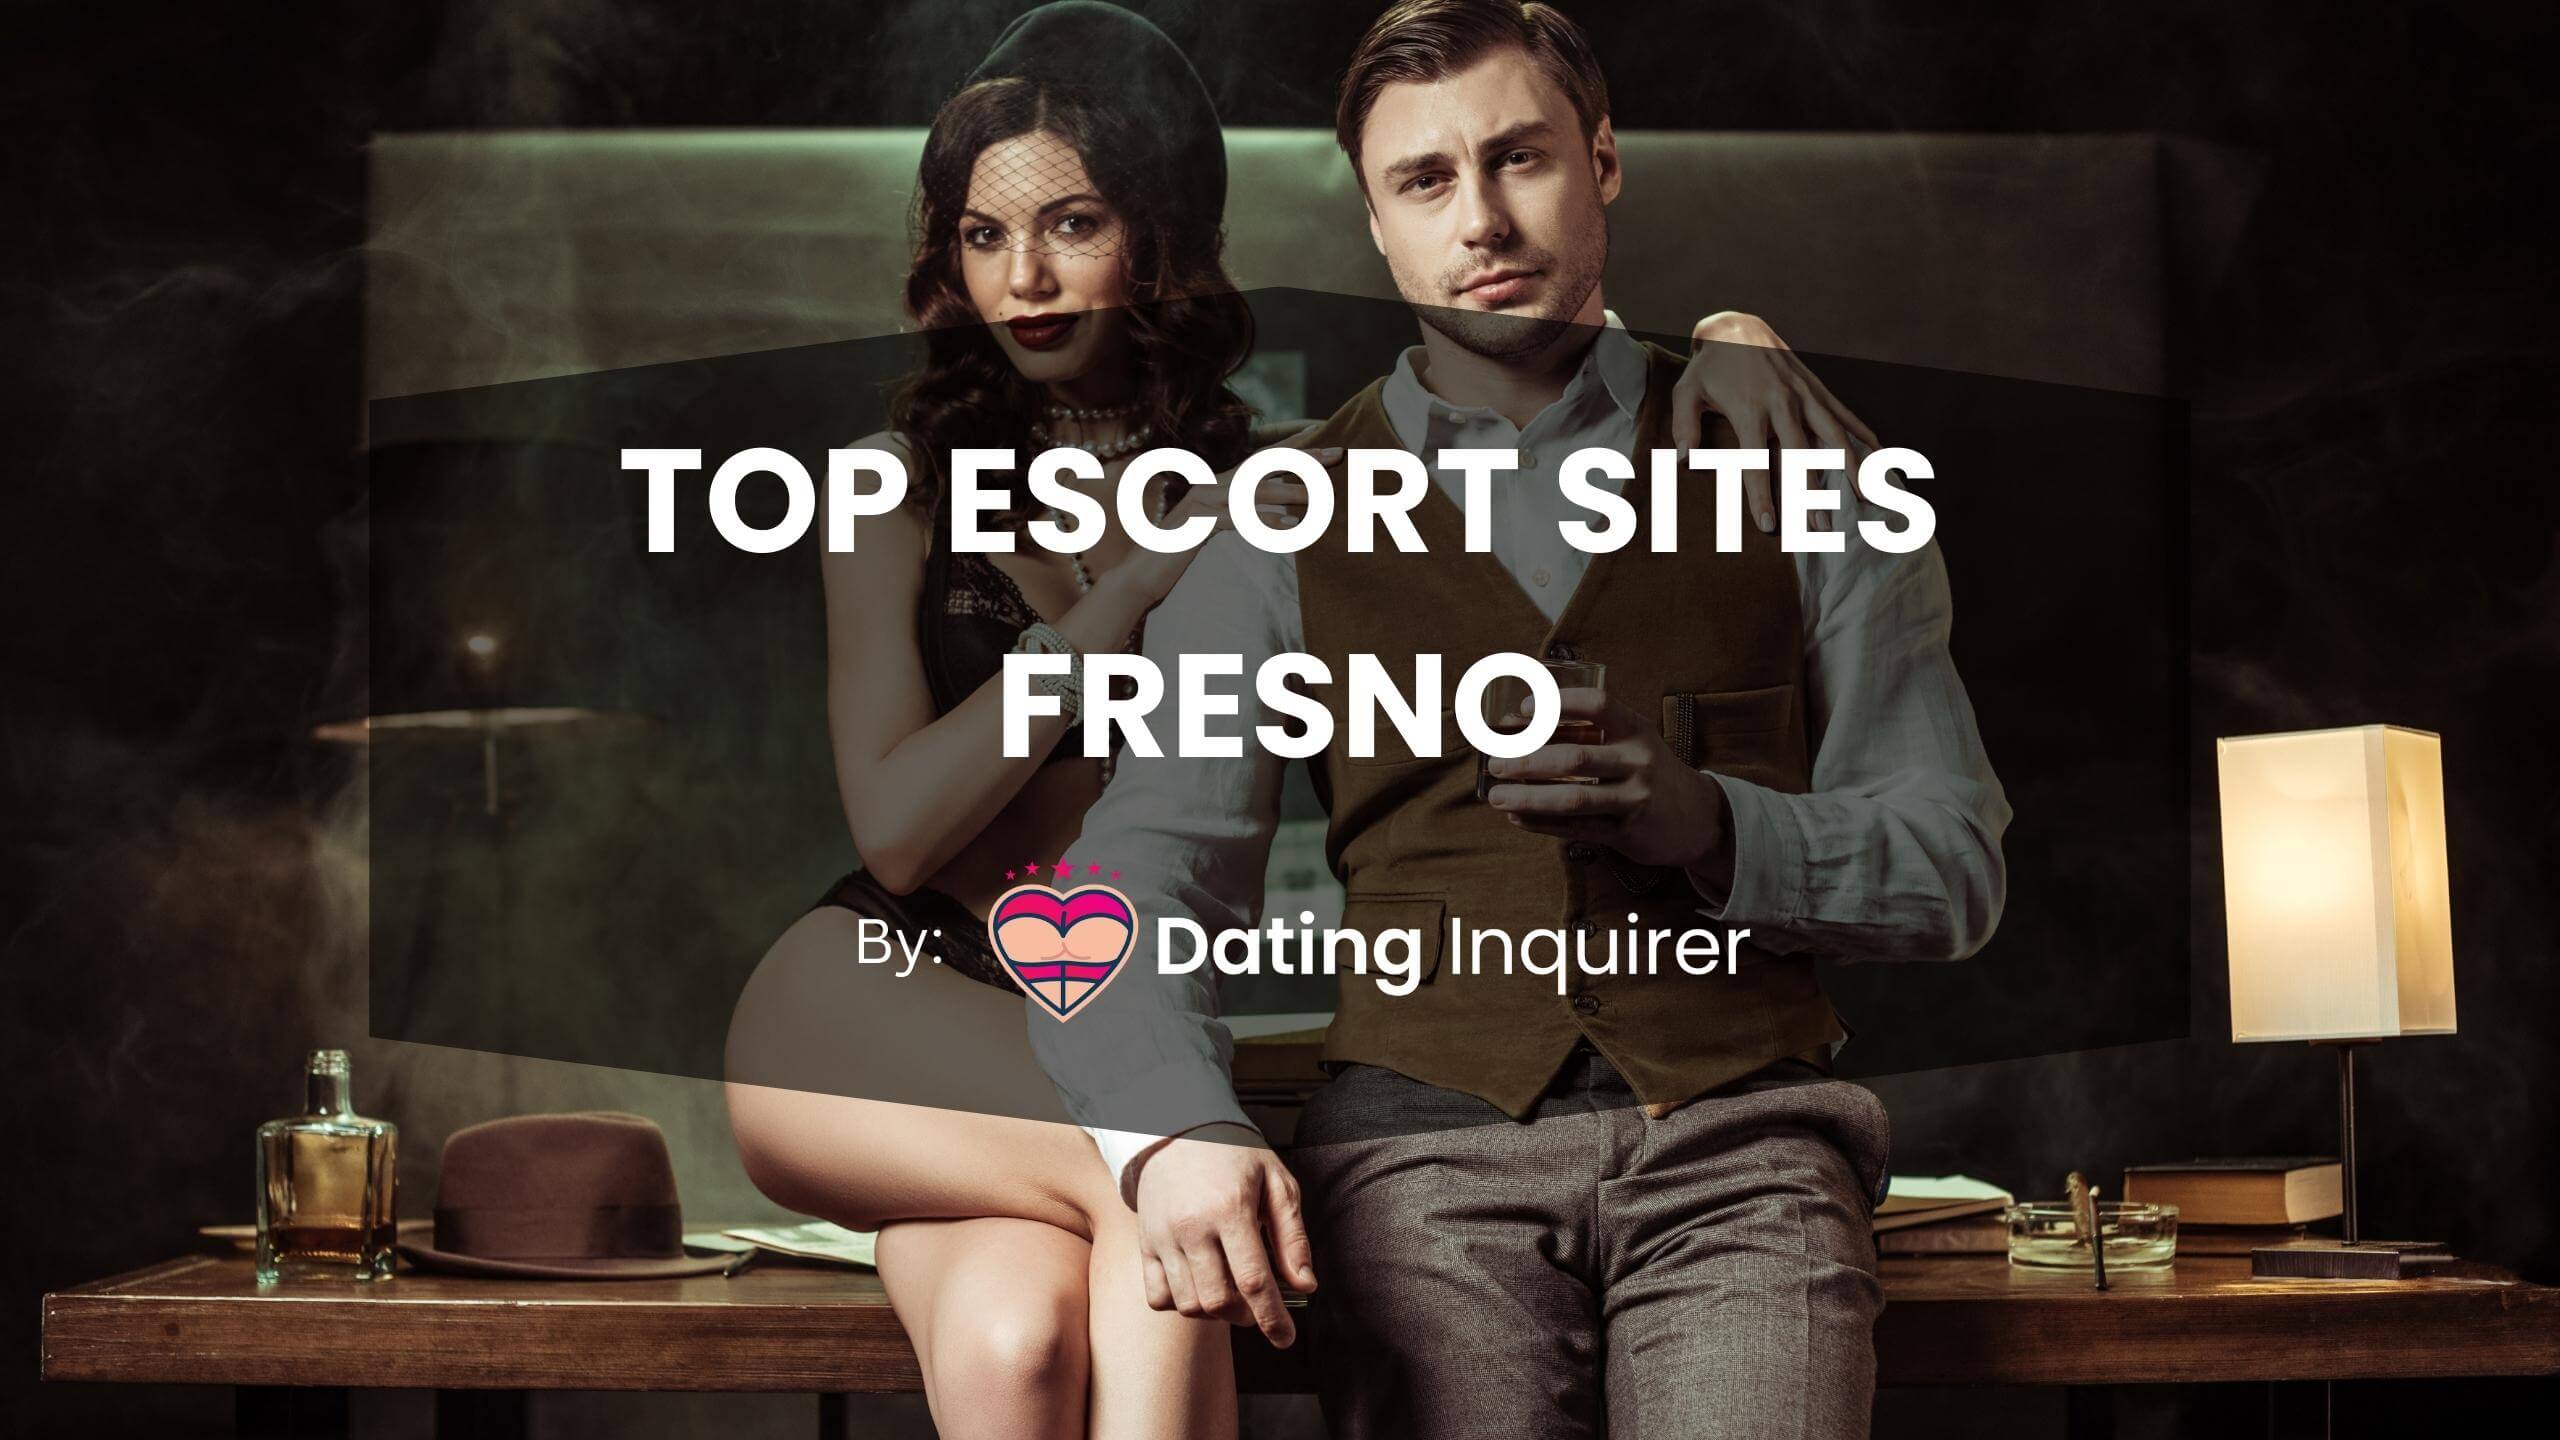 top escort sites fresno cover